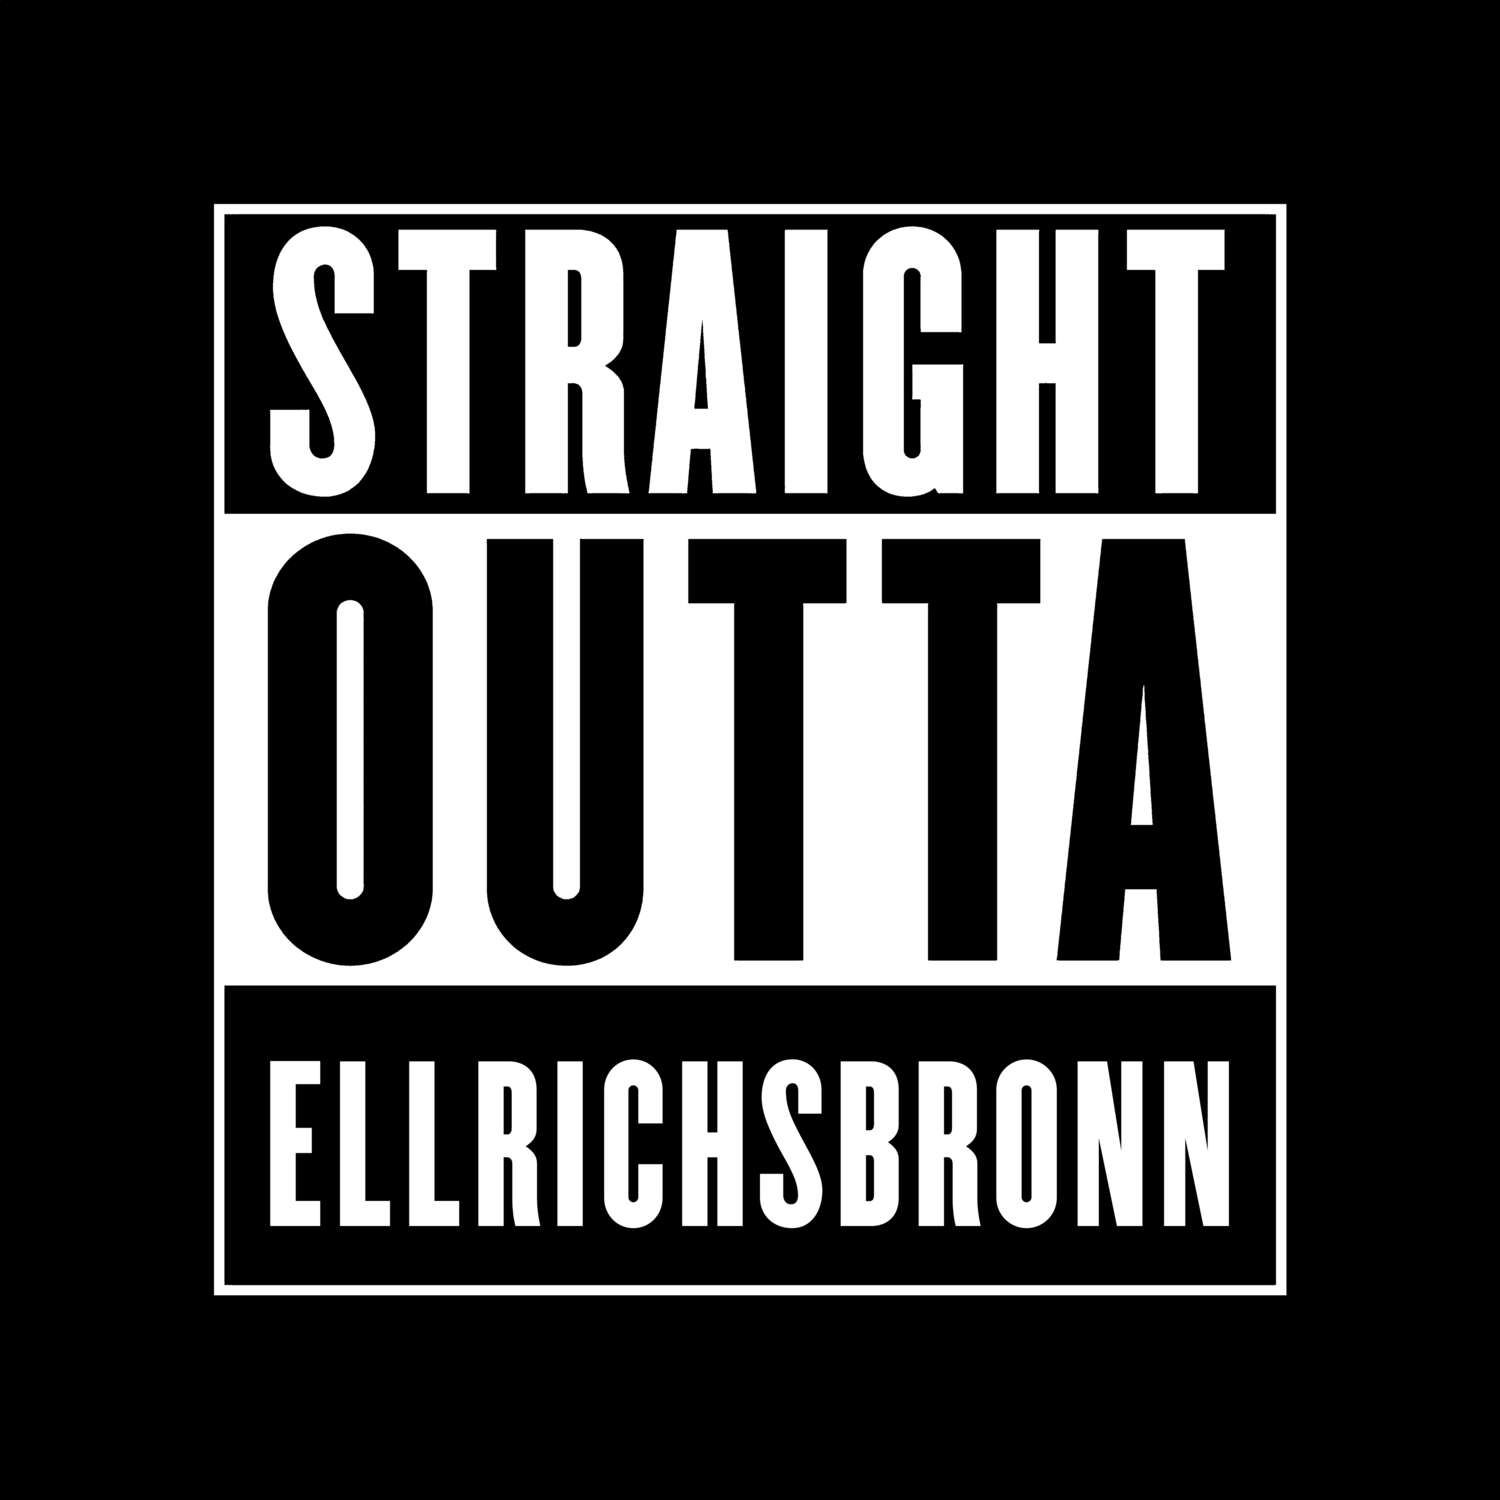 Ellrichsbronn T-Shirt »Straight Outta«